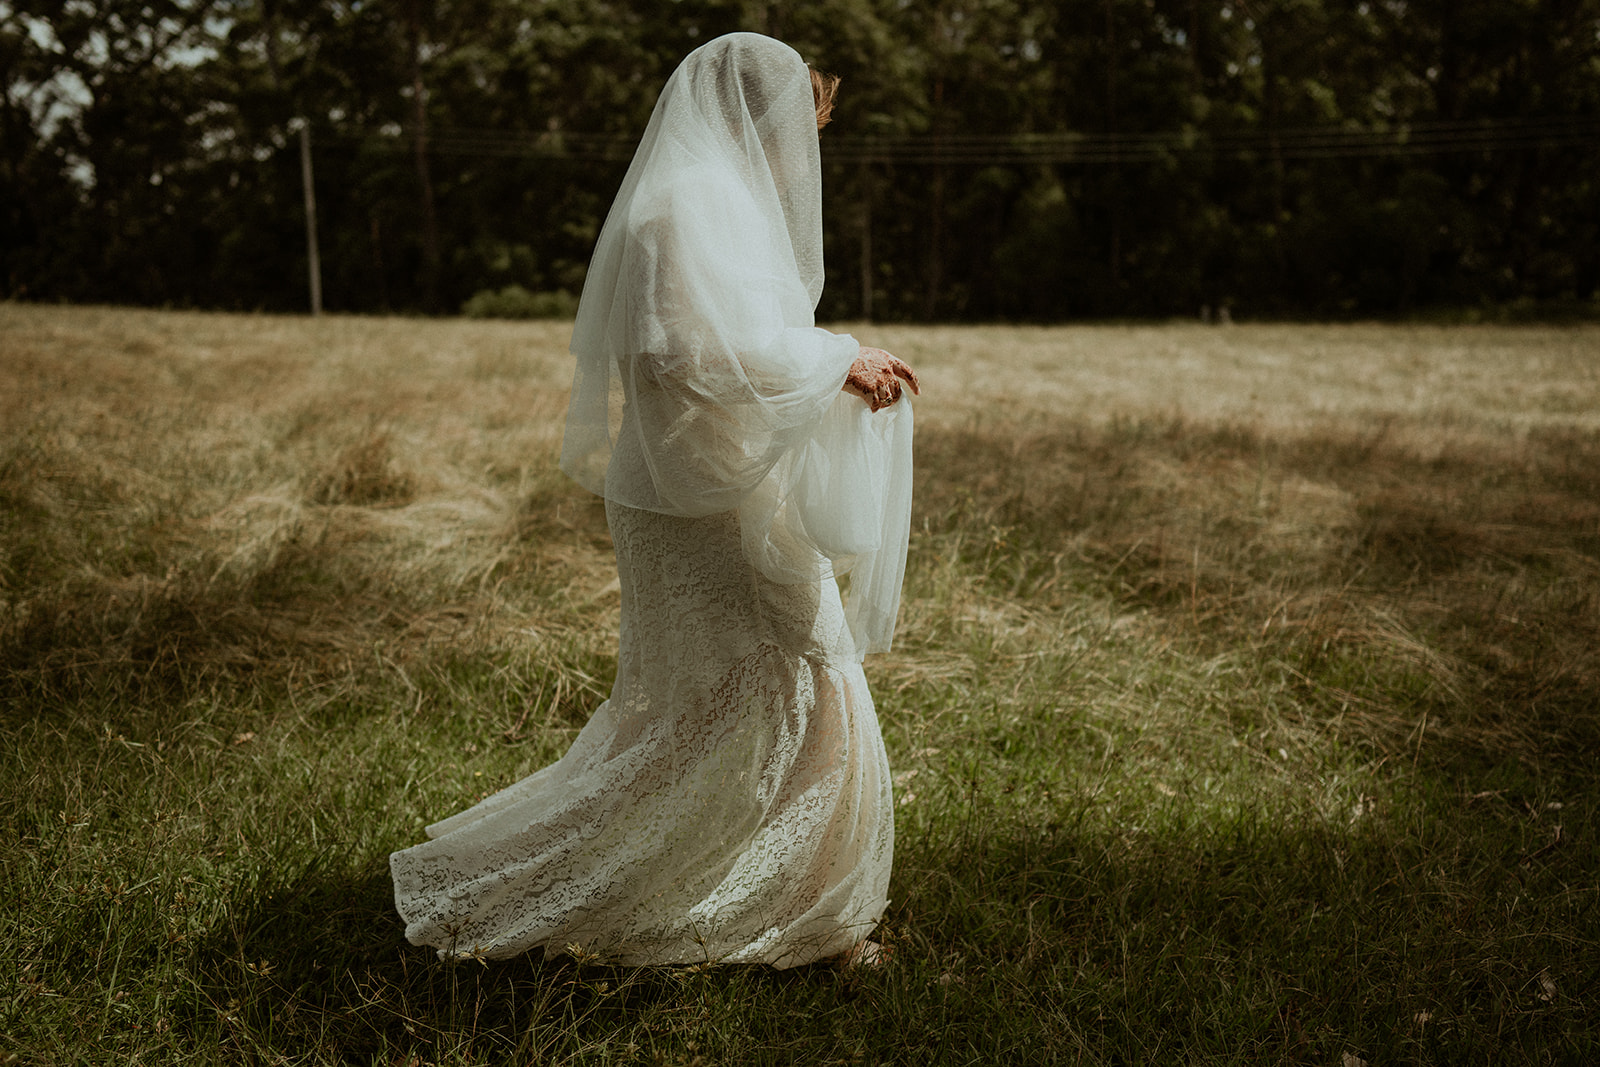 Bride, wearing a long flowing veil